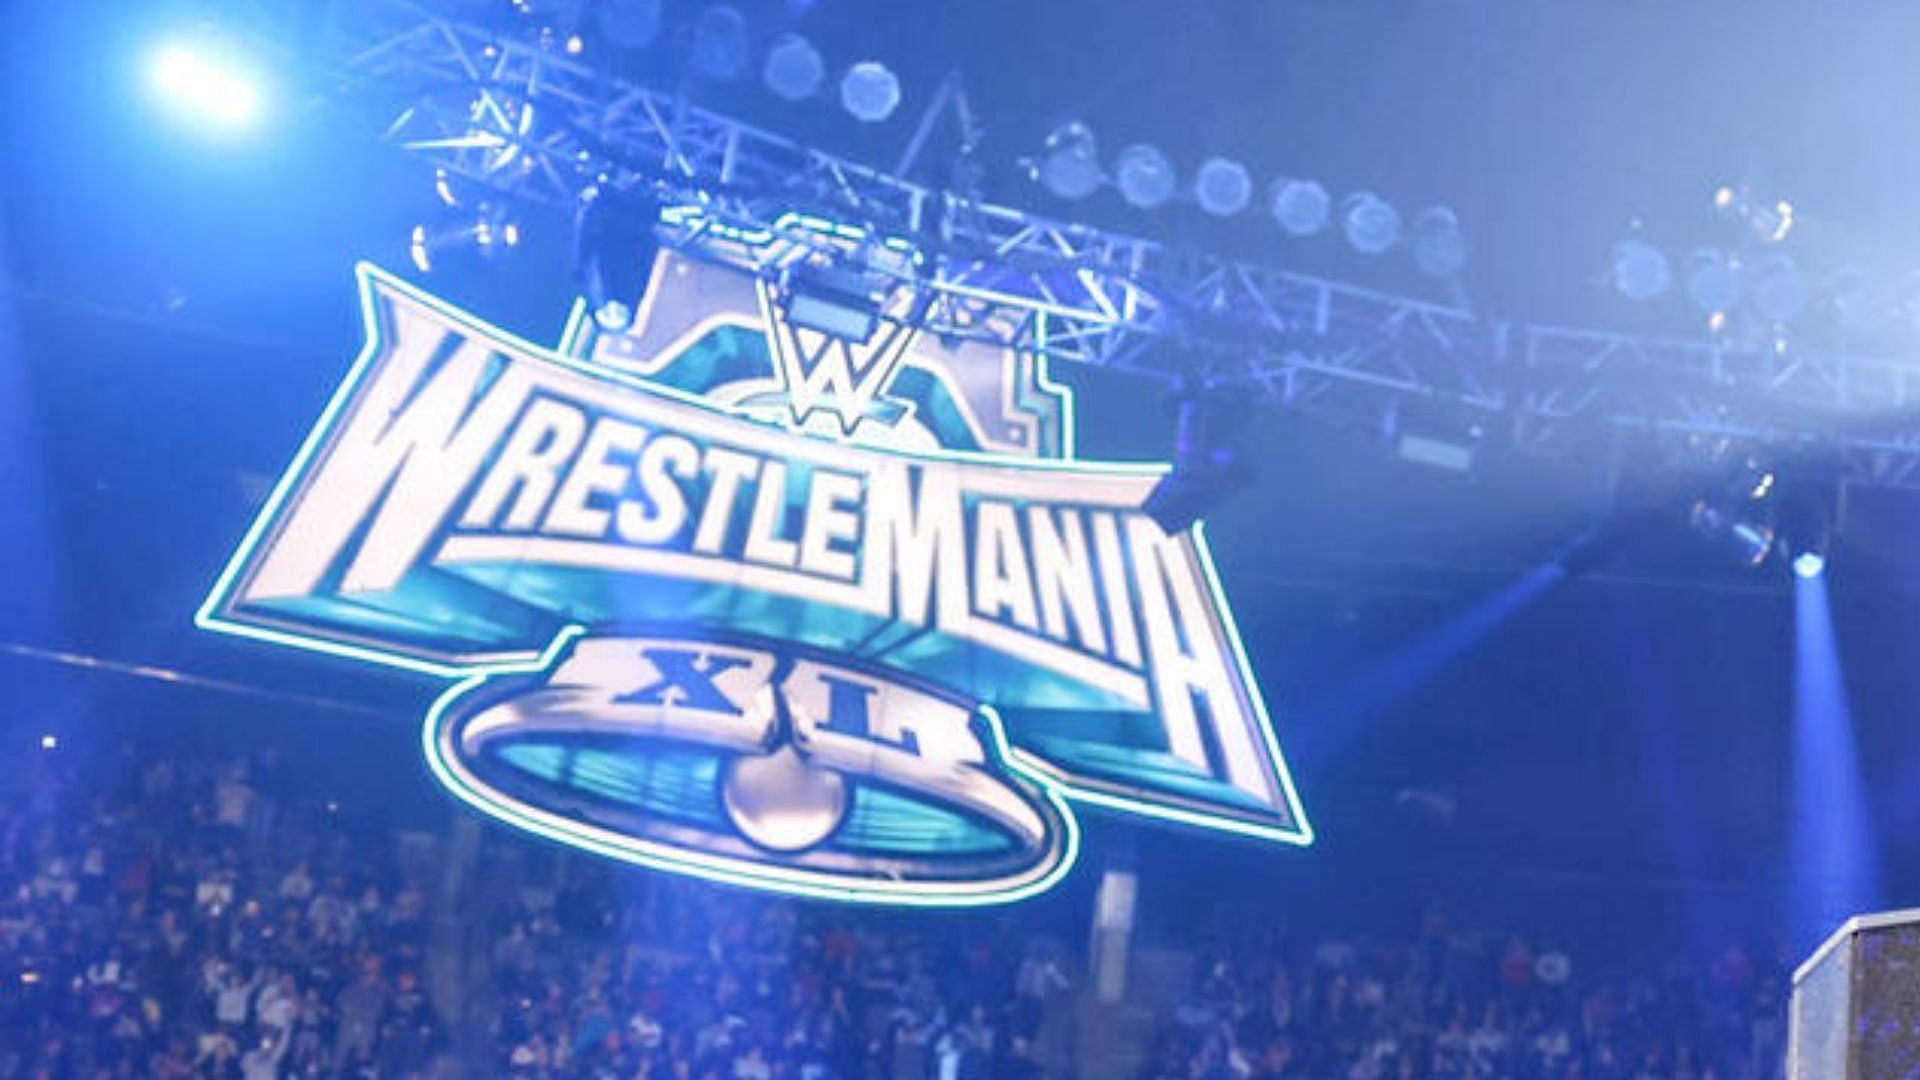 WrestleMania XL will be held in Philadelphia, Pennsylvania